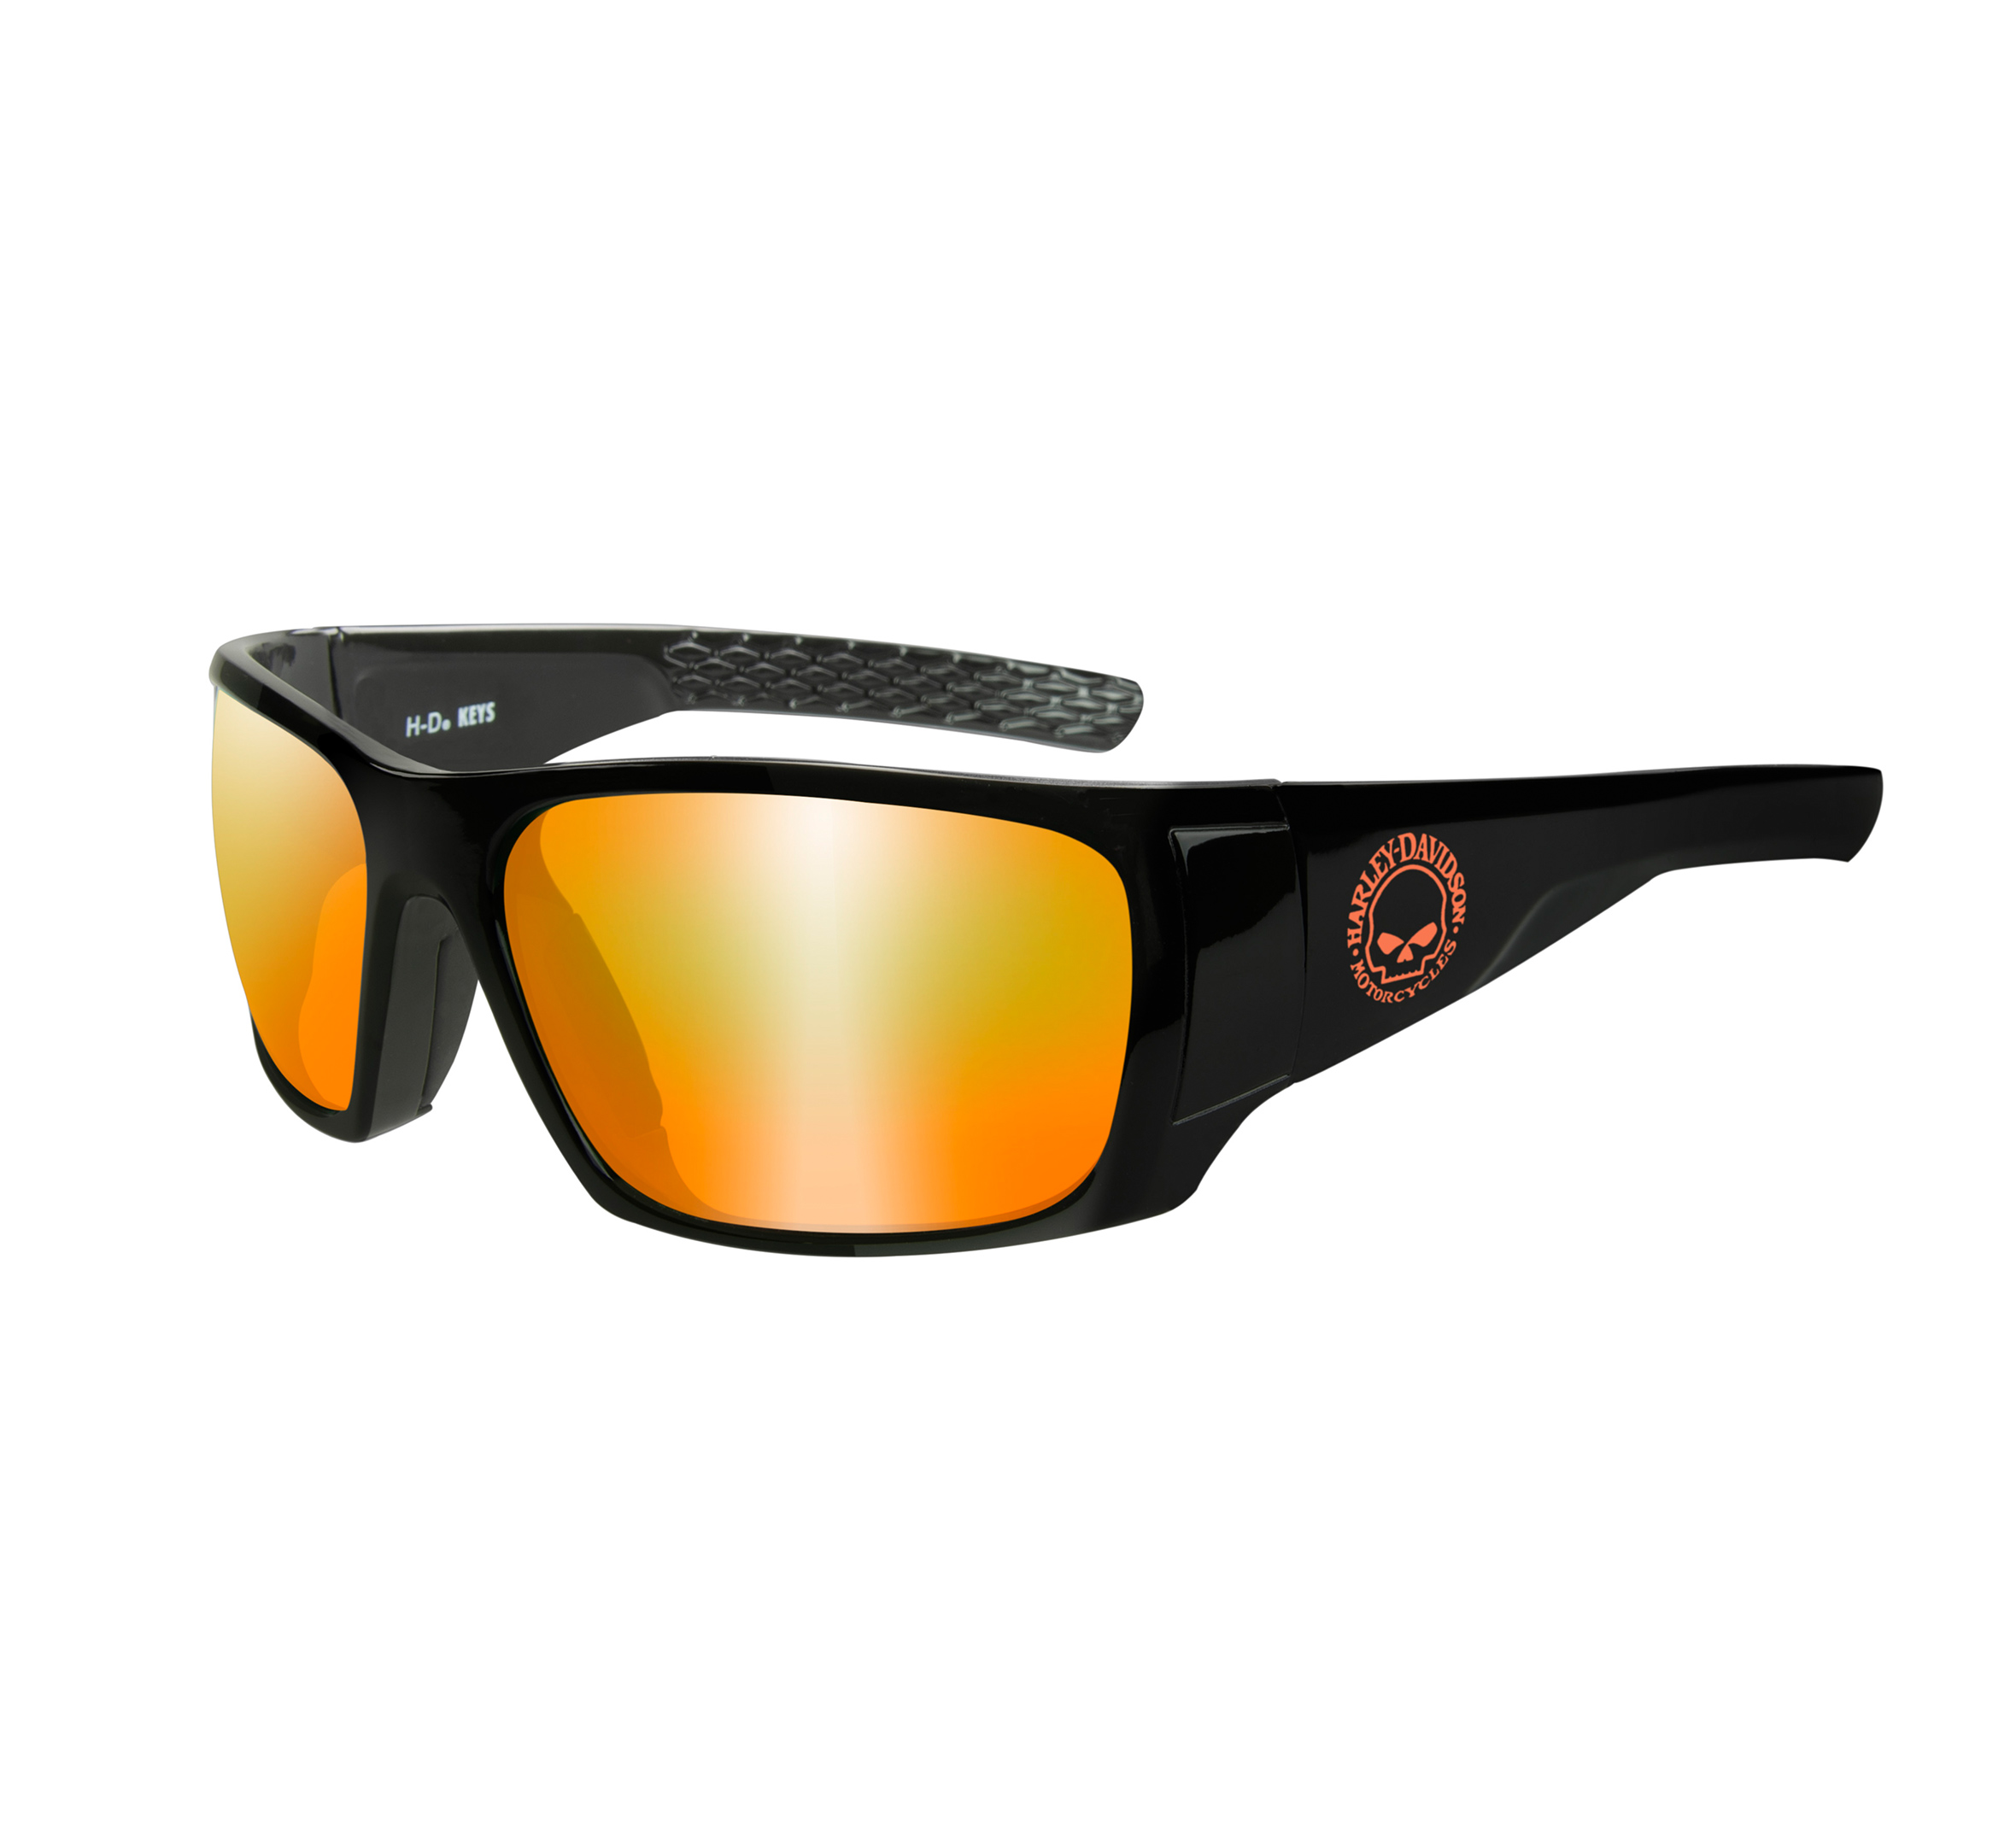 Harley Davidson® Bar & Shield Glasses Black Frame Mirrored Lens Safety Glasses 